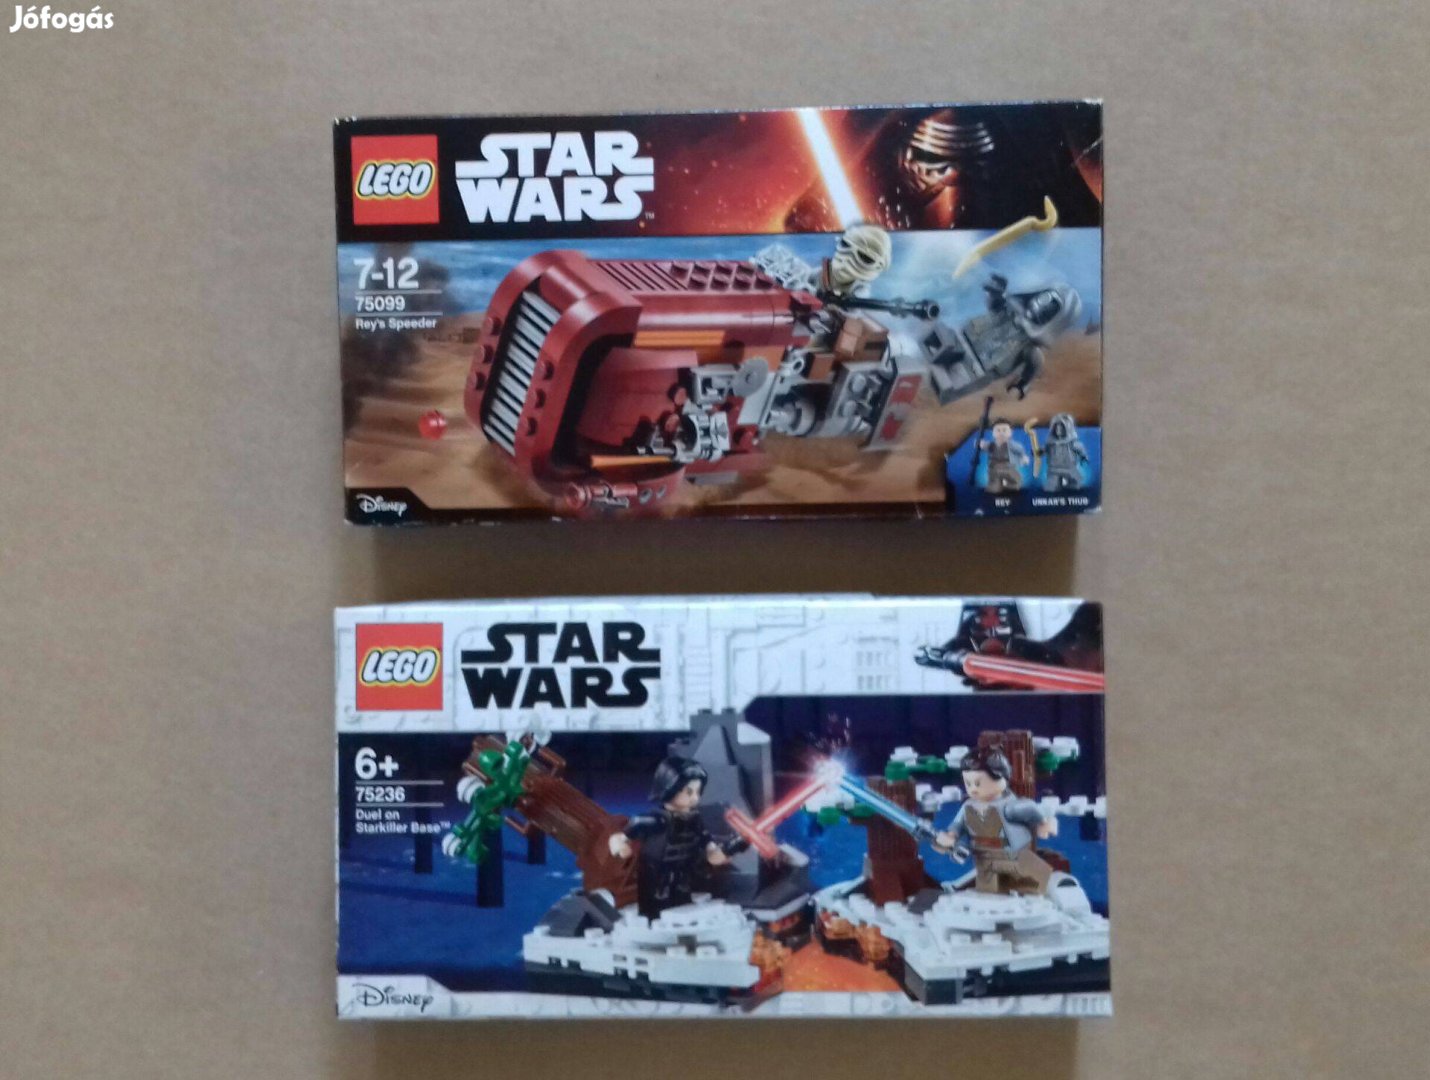 Ébredő Erő bontatlan Star Wars LEGO 75099 Rey siklója + 75236 Fox.árba